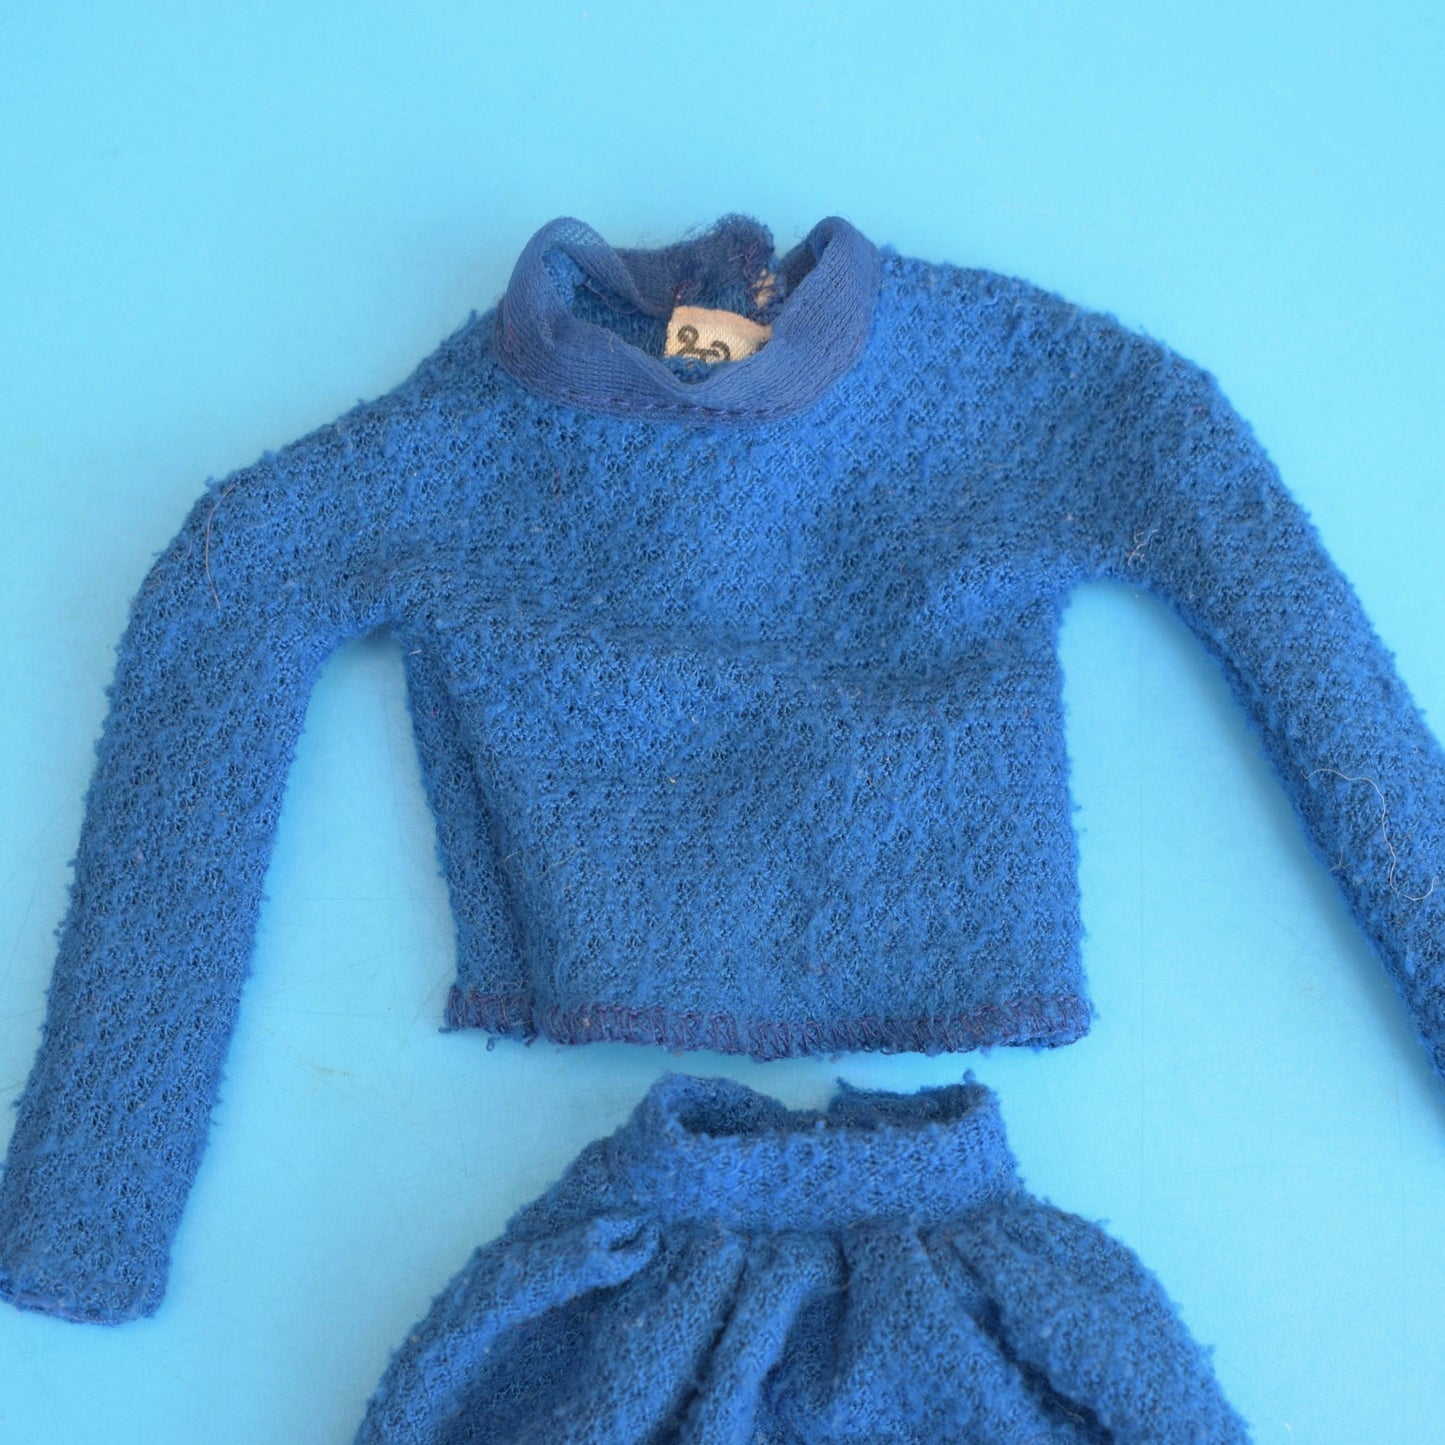 Vintage 1970s Barbie Outfit - Blue Textured